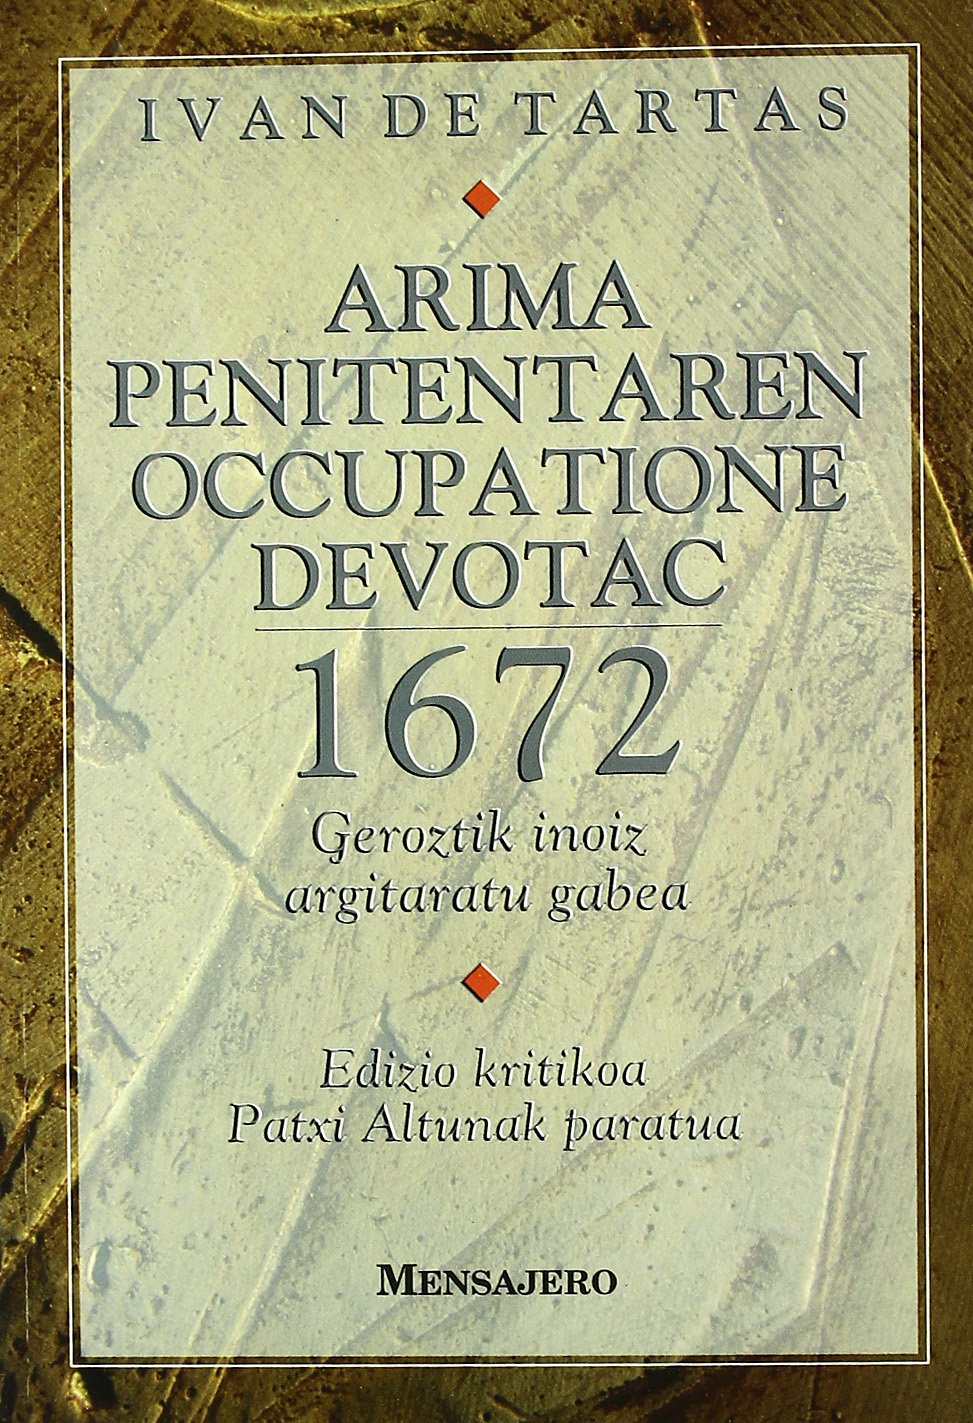 Imagen de portada del libro Arima penitentaren occupatione devotac